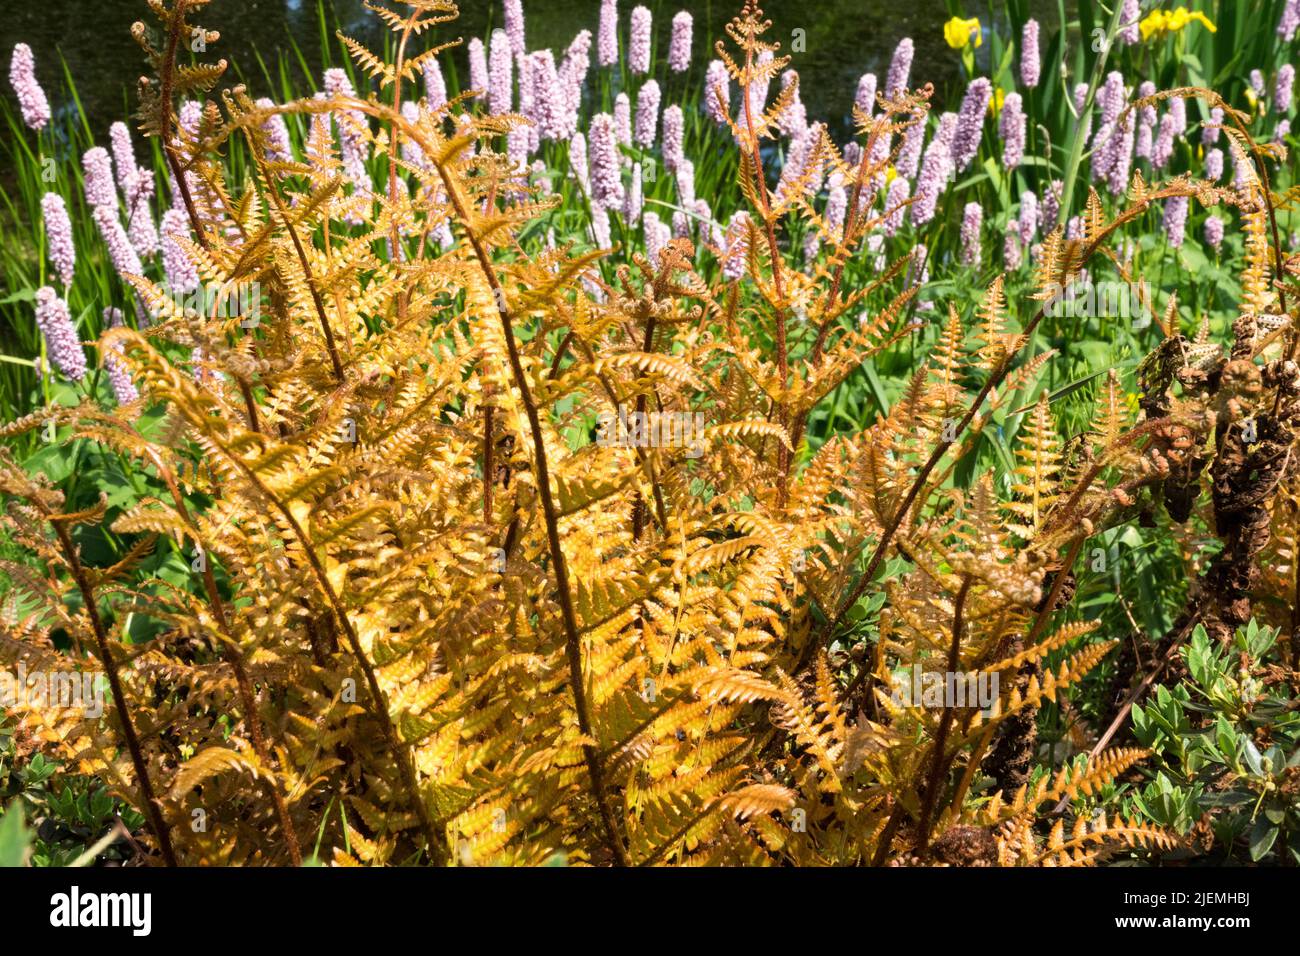 Dryopteris erythrosora 'Brilliance' Japanese Shield Fern in garden Persicaria 'Superba' background Stock Photo